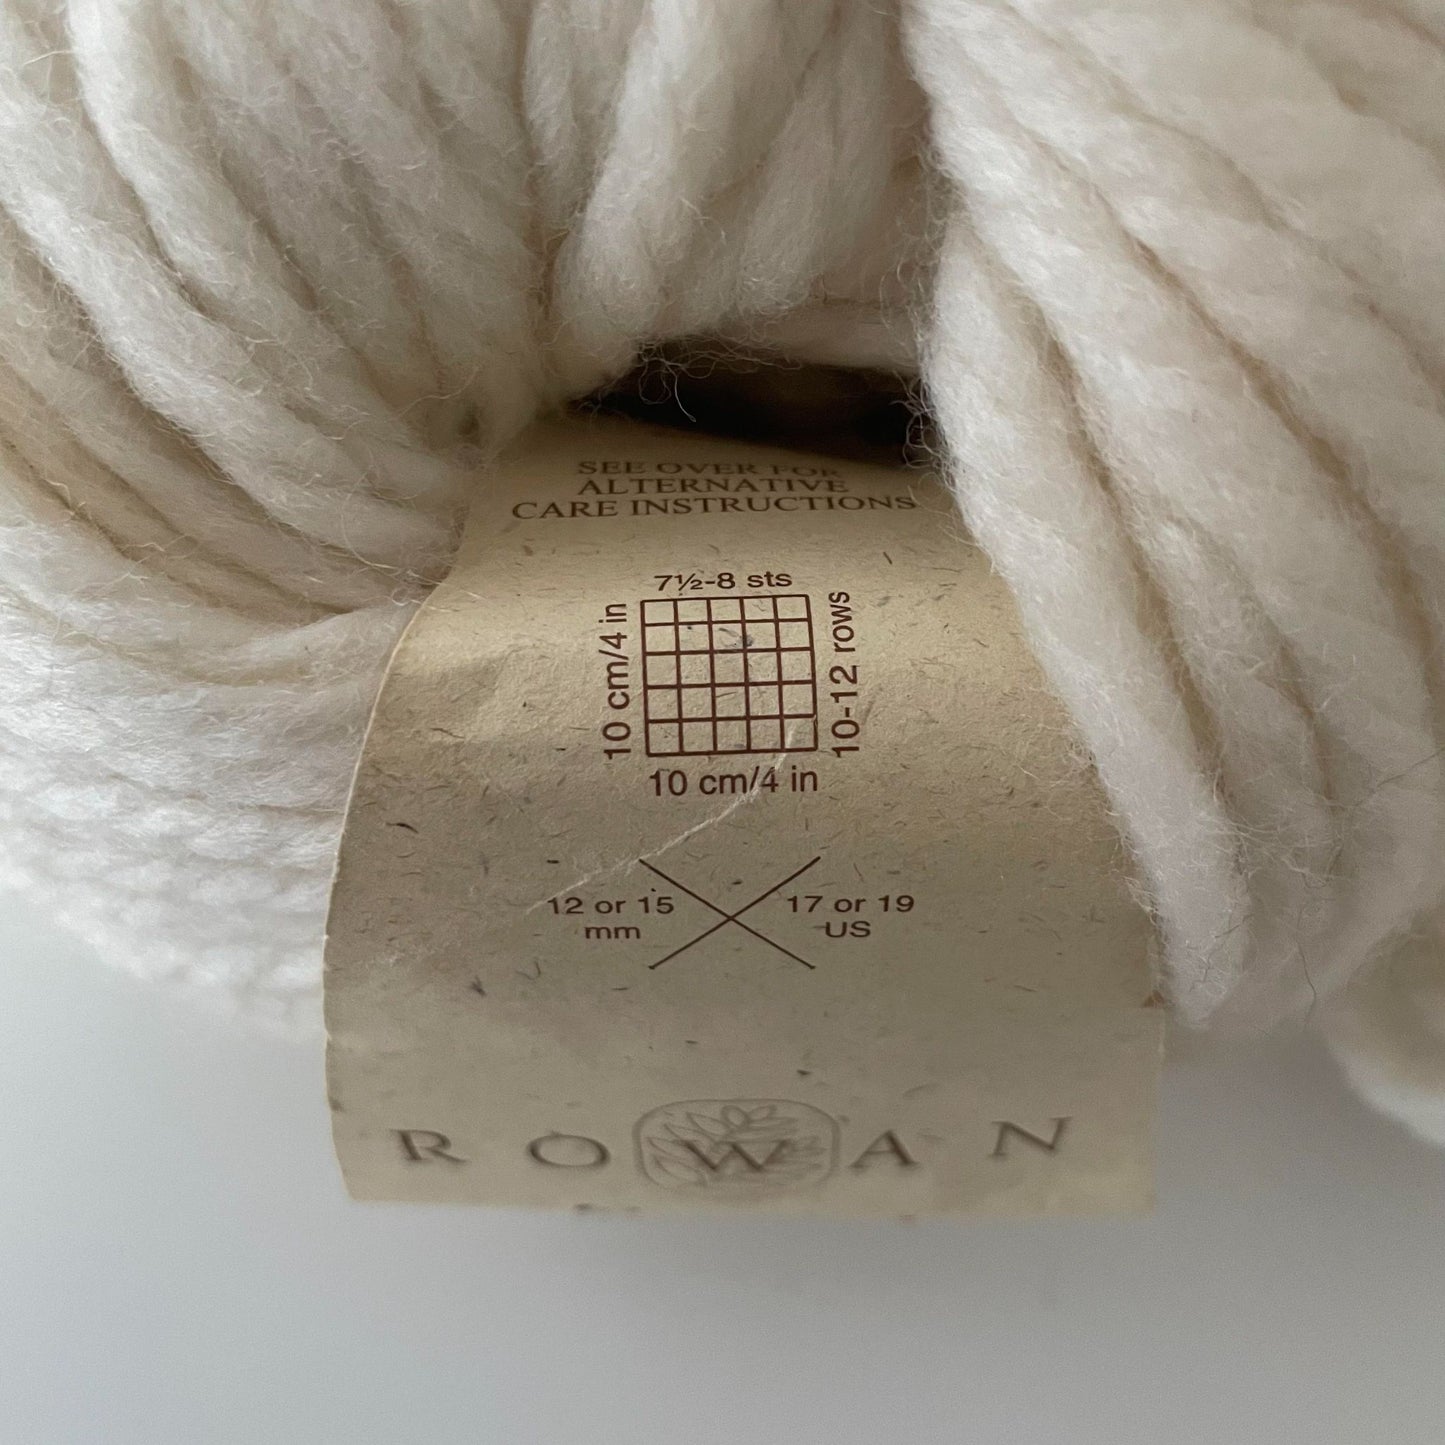 Rowan Big wool lankapussi - 2